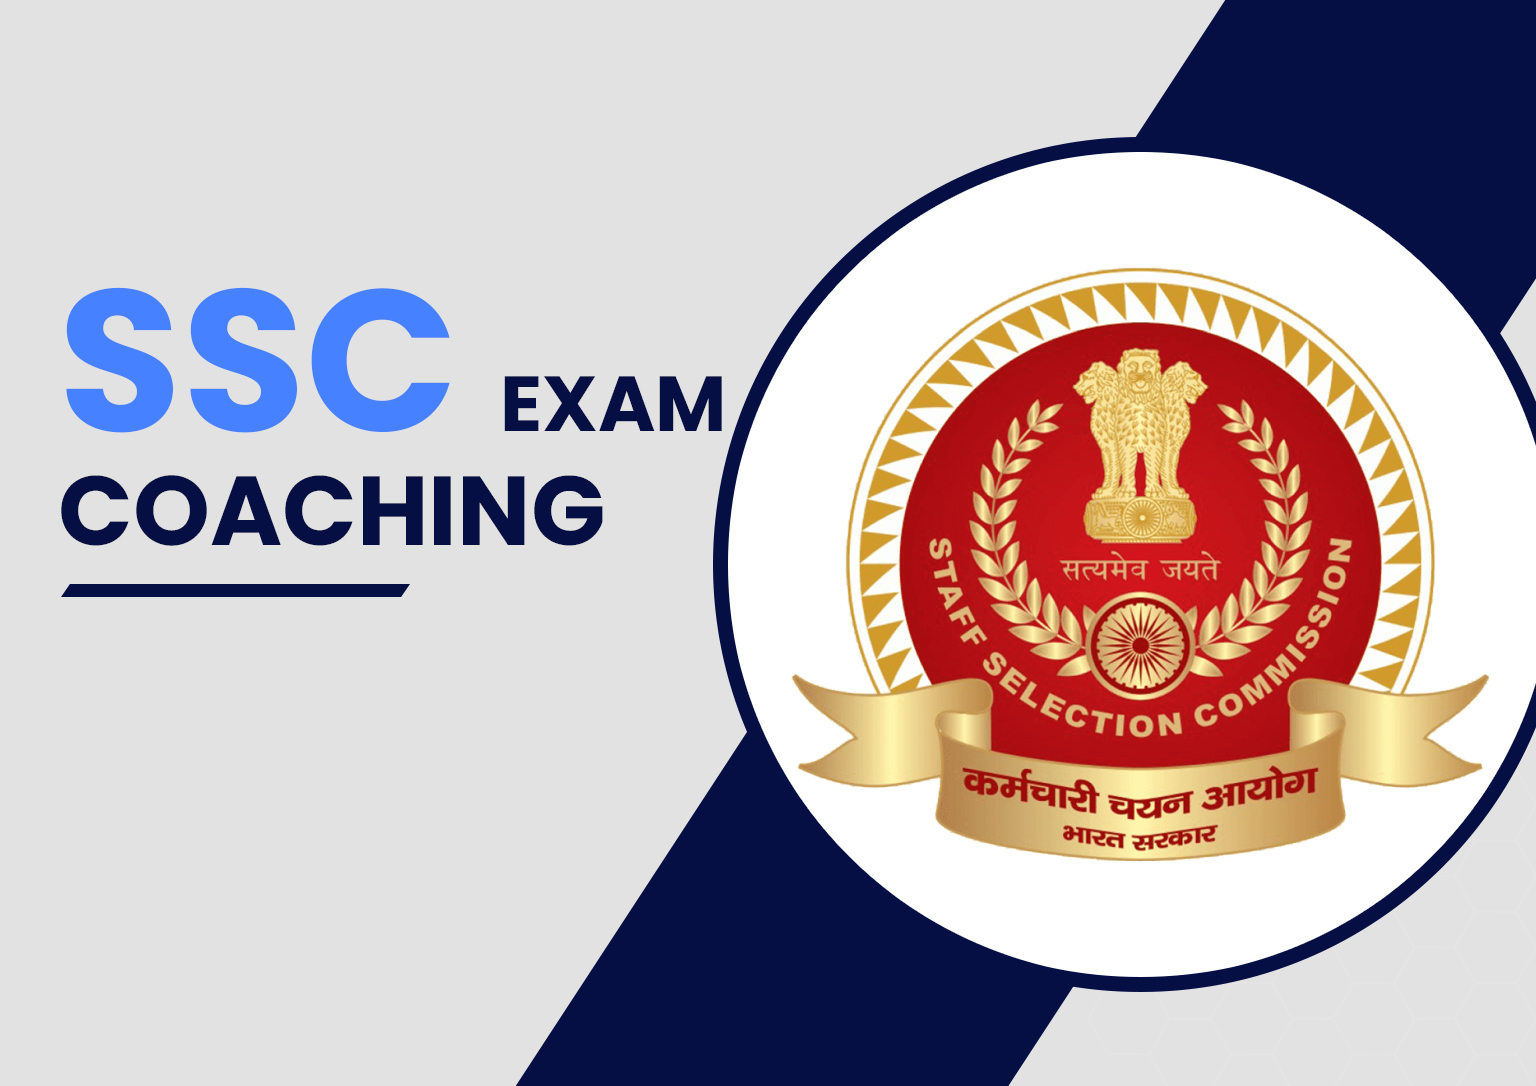 SSC Exam Coaching in Kolkata